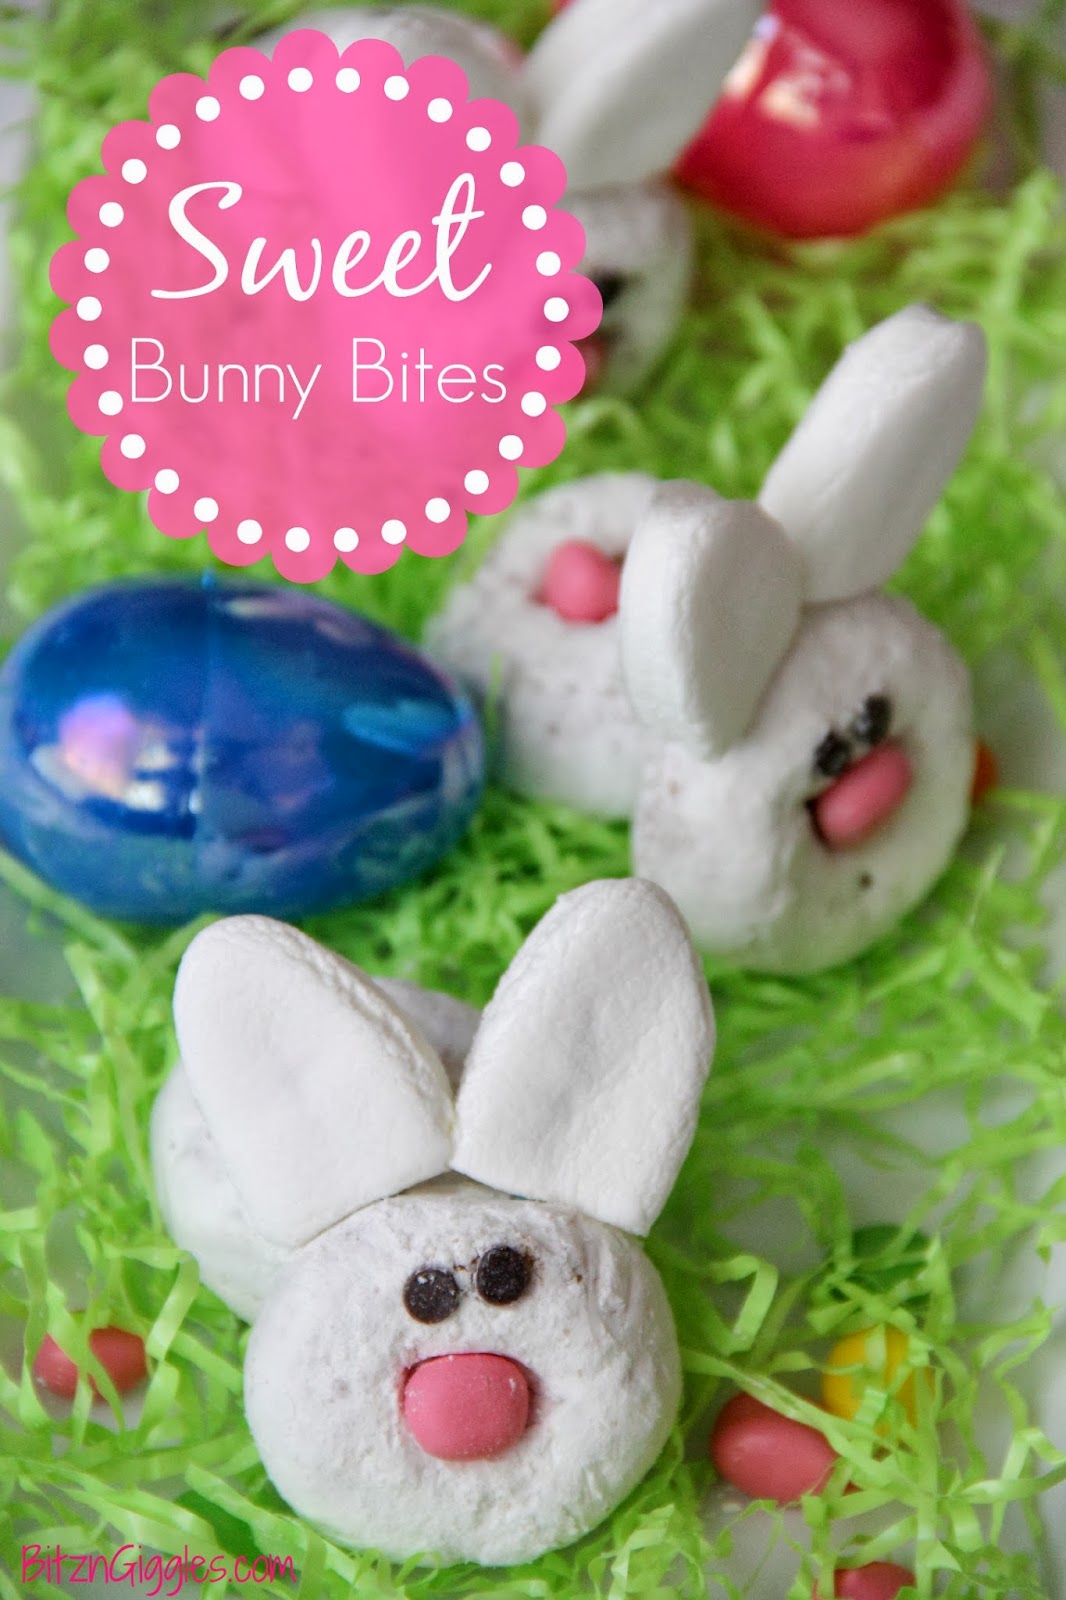 https://www.bitzngiggles.com/2014/04/sweet-bunny-bites.html